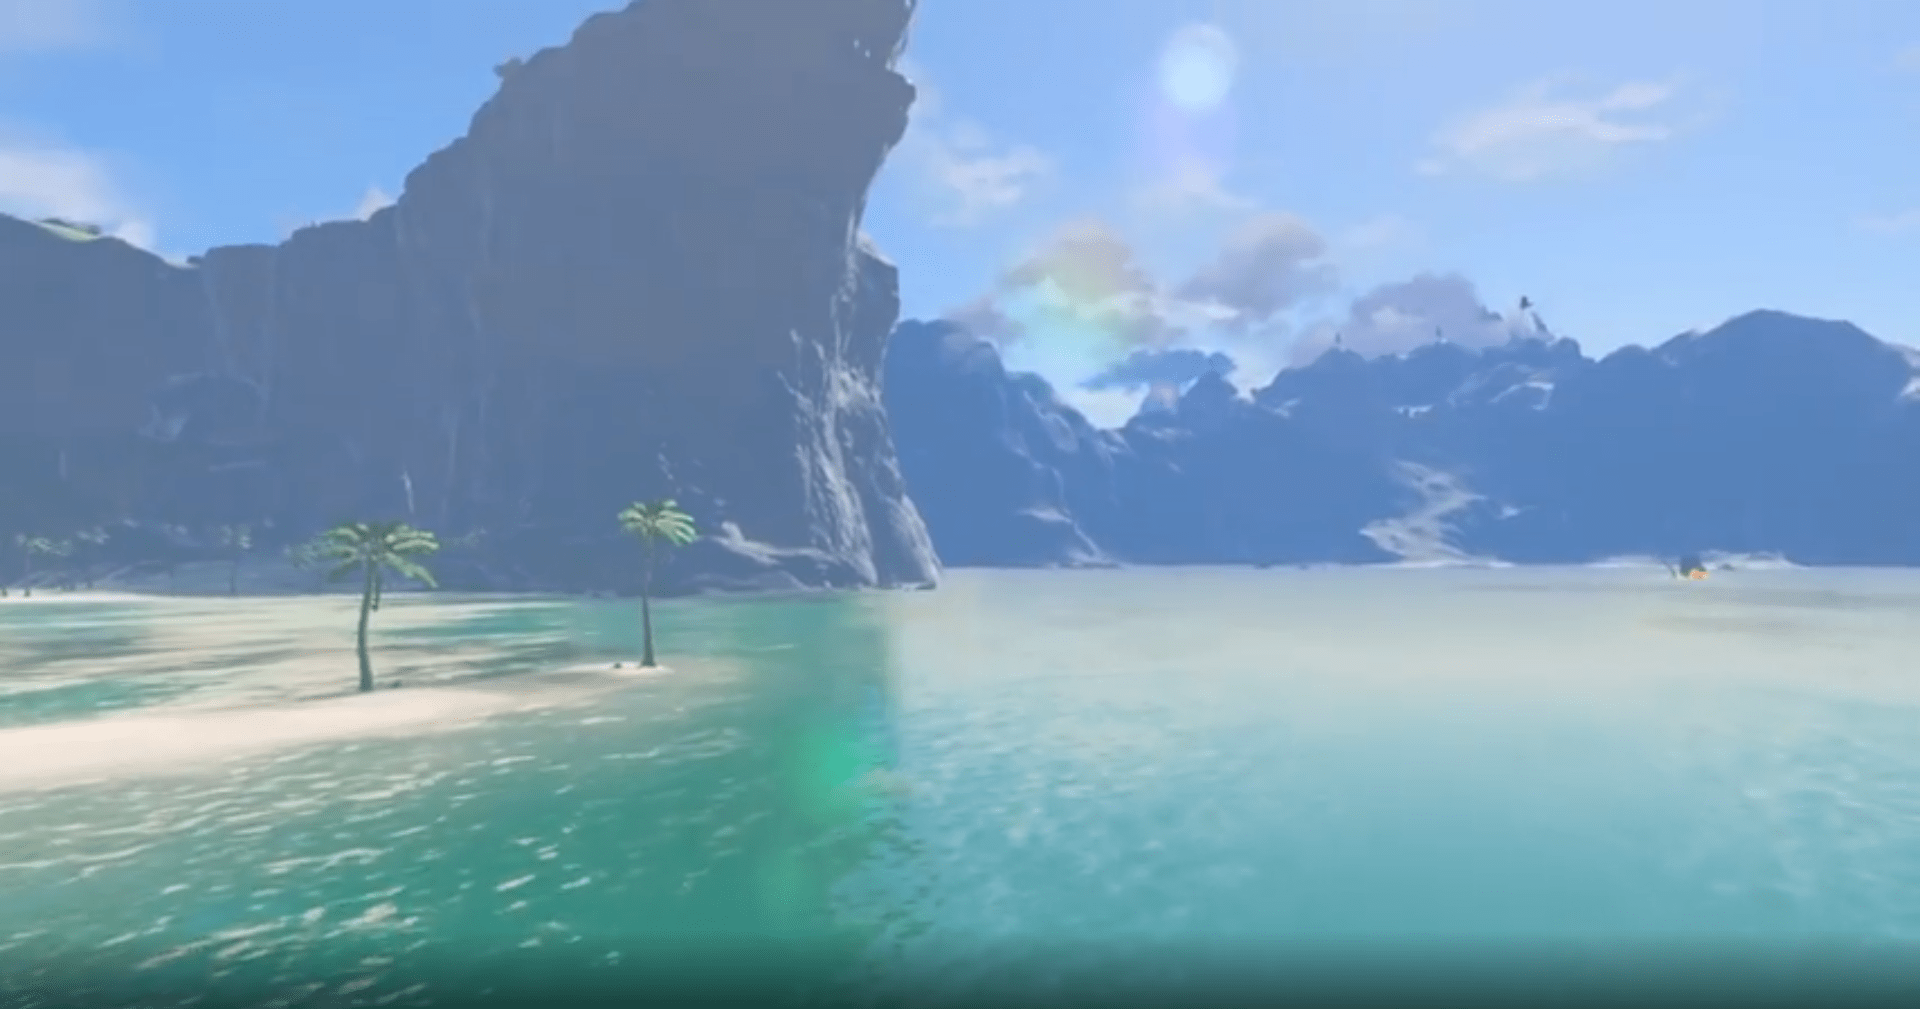  The Legend of Zelda Breath of the Wild 2017 game